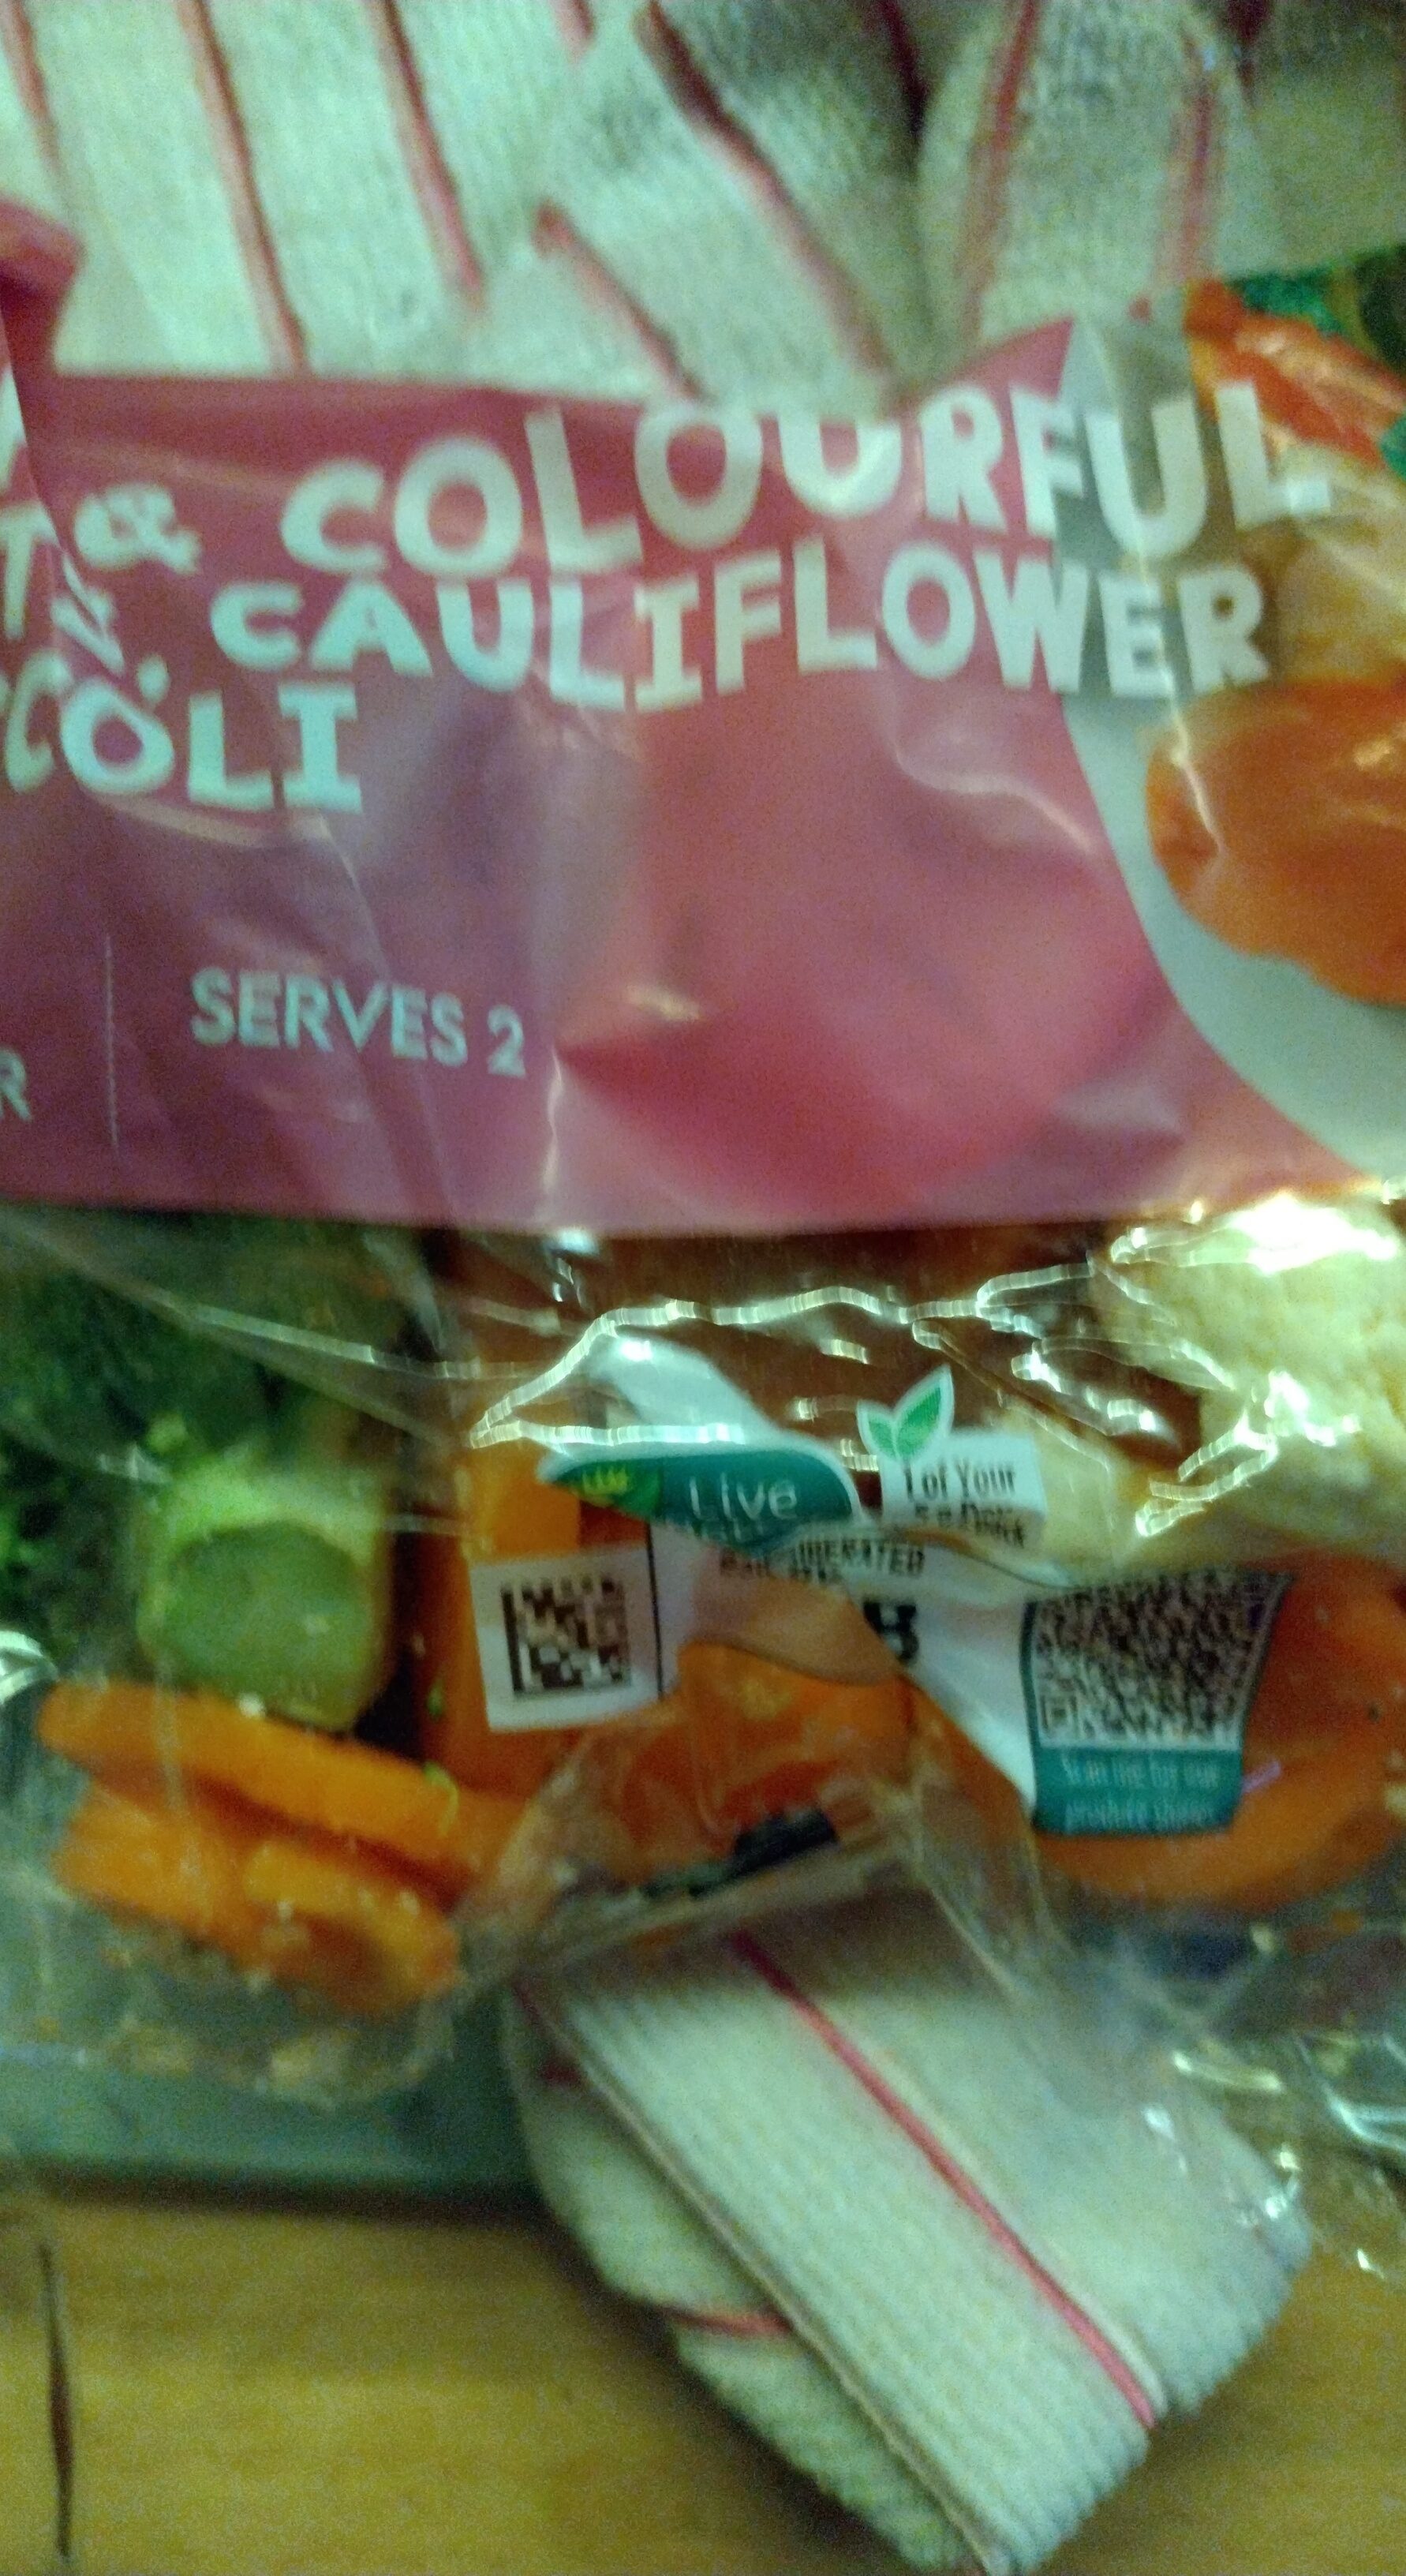 Carrot, cauliflower and broccoli salad - Product